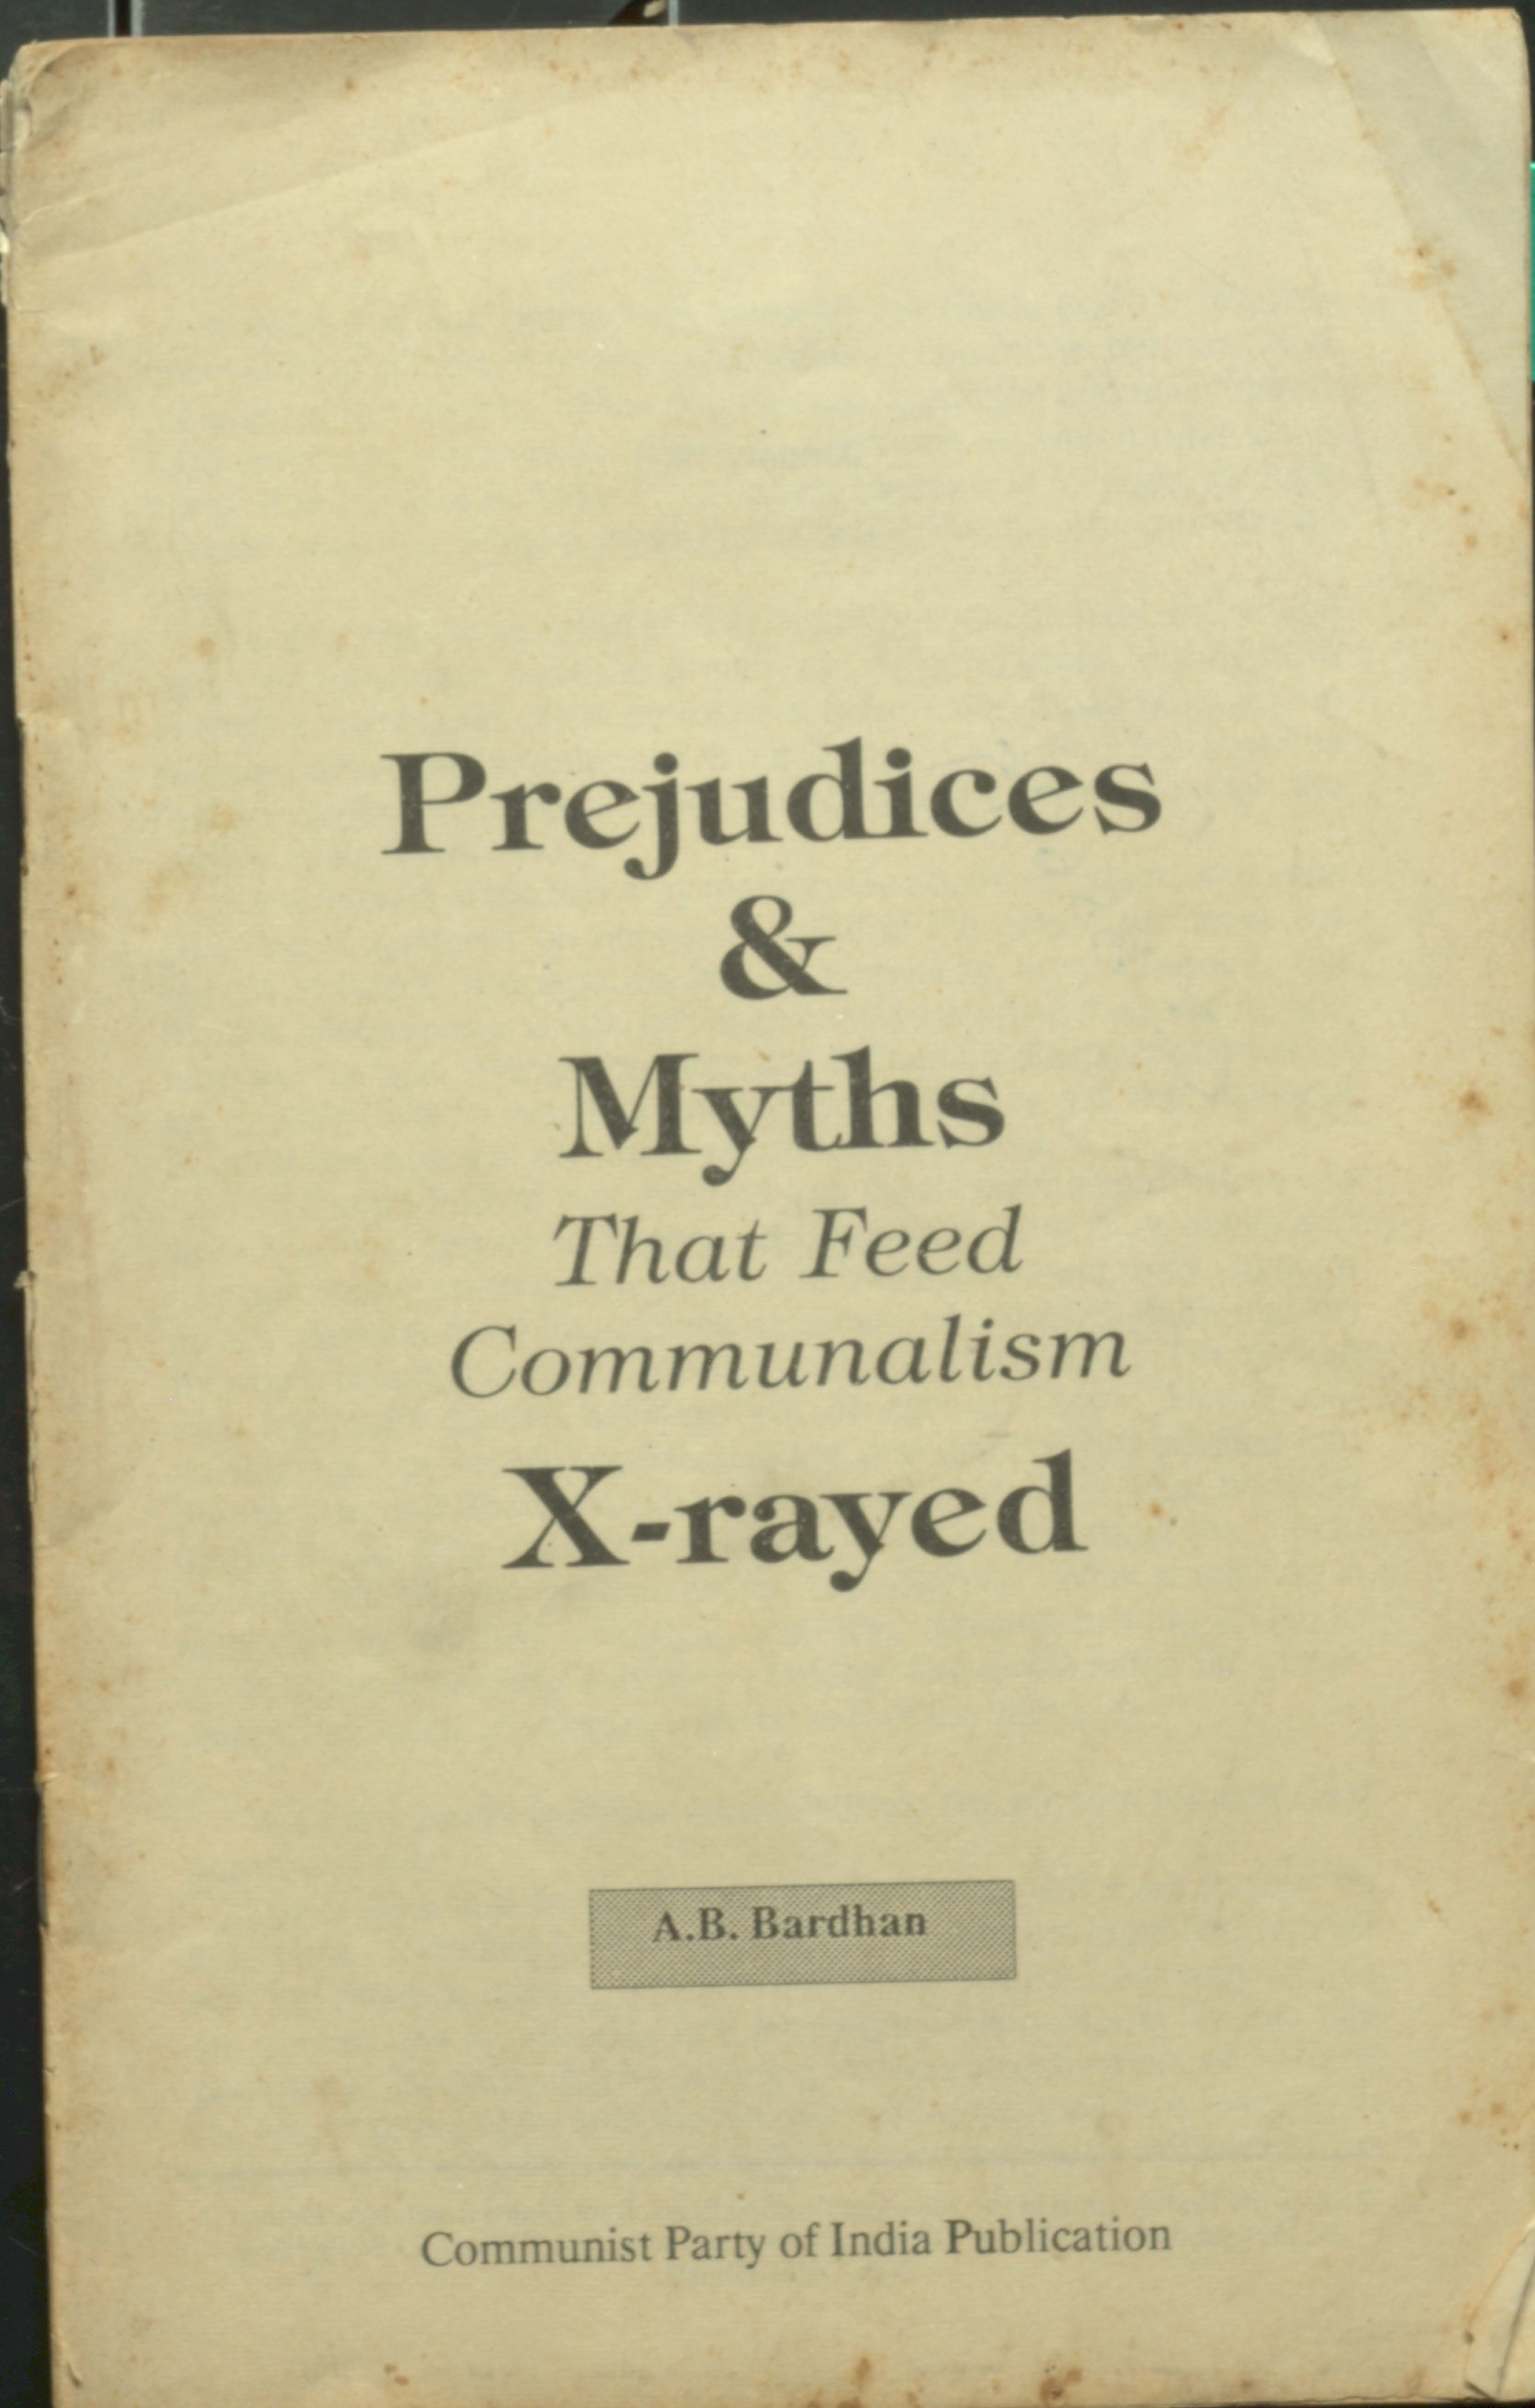 Prejudices & Myths That Feed Communalism X-rayed